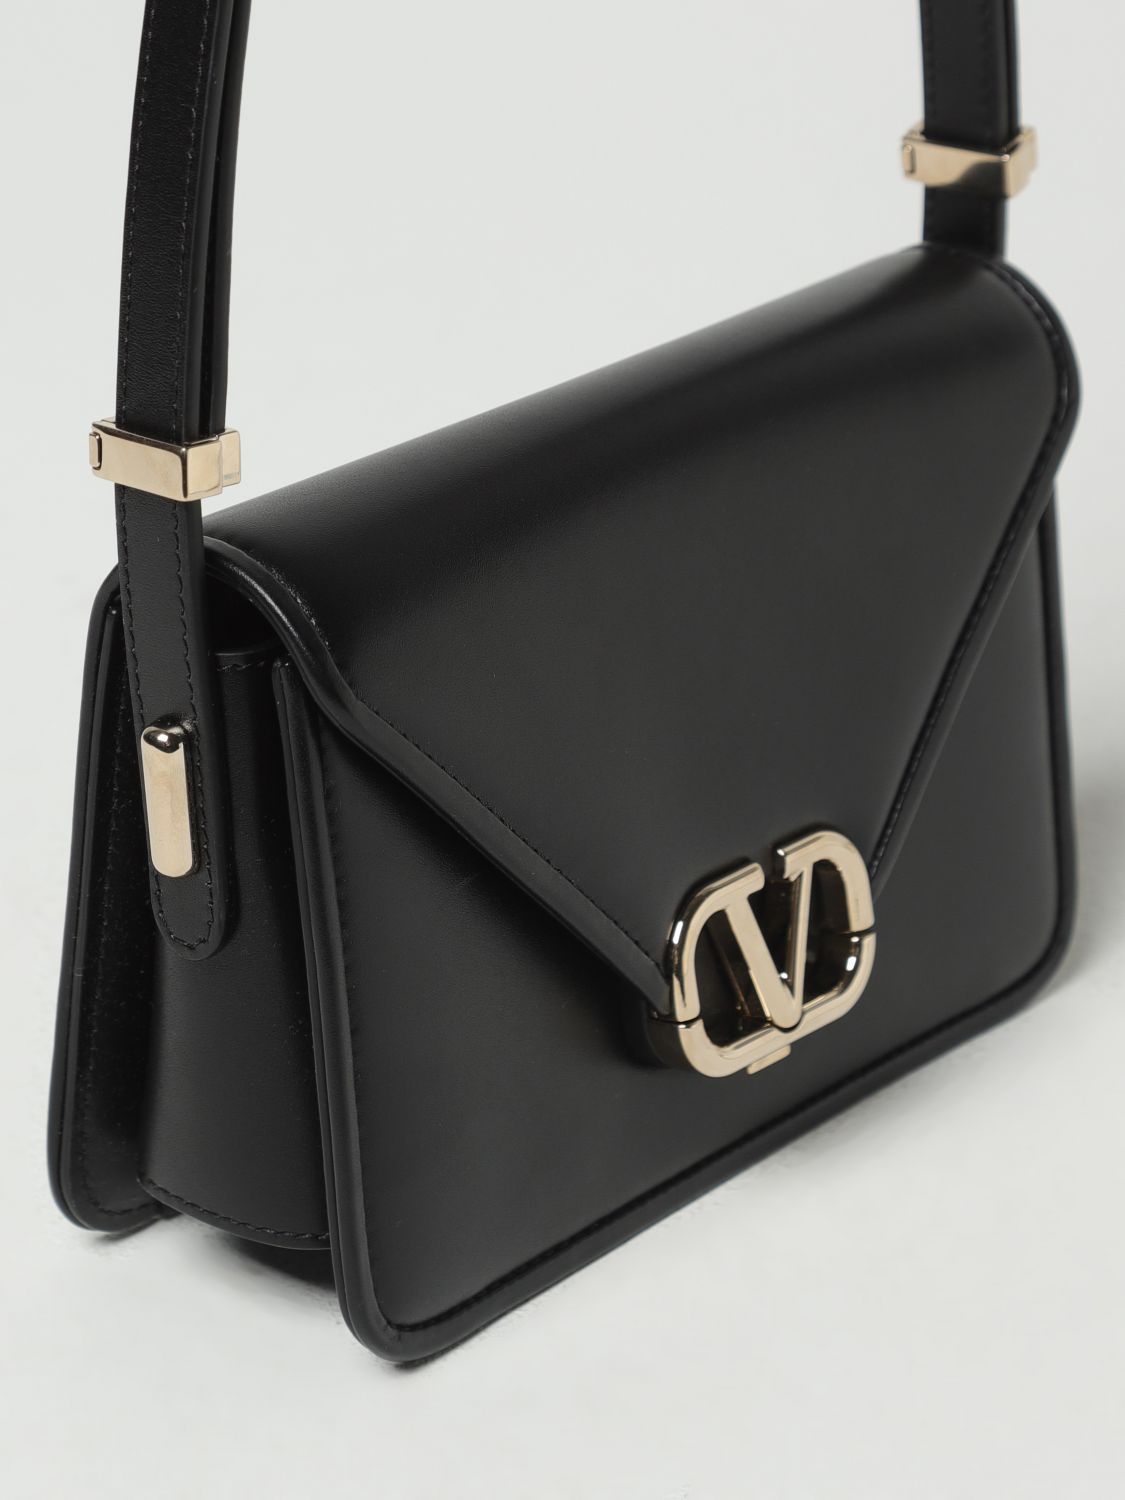 VALENTINO GARAVANI: Letter Bag in leather - Pink  Valentino Garavani mini  bag 3W2B0M59IAI online at